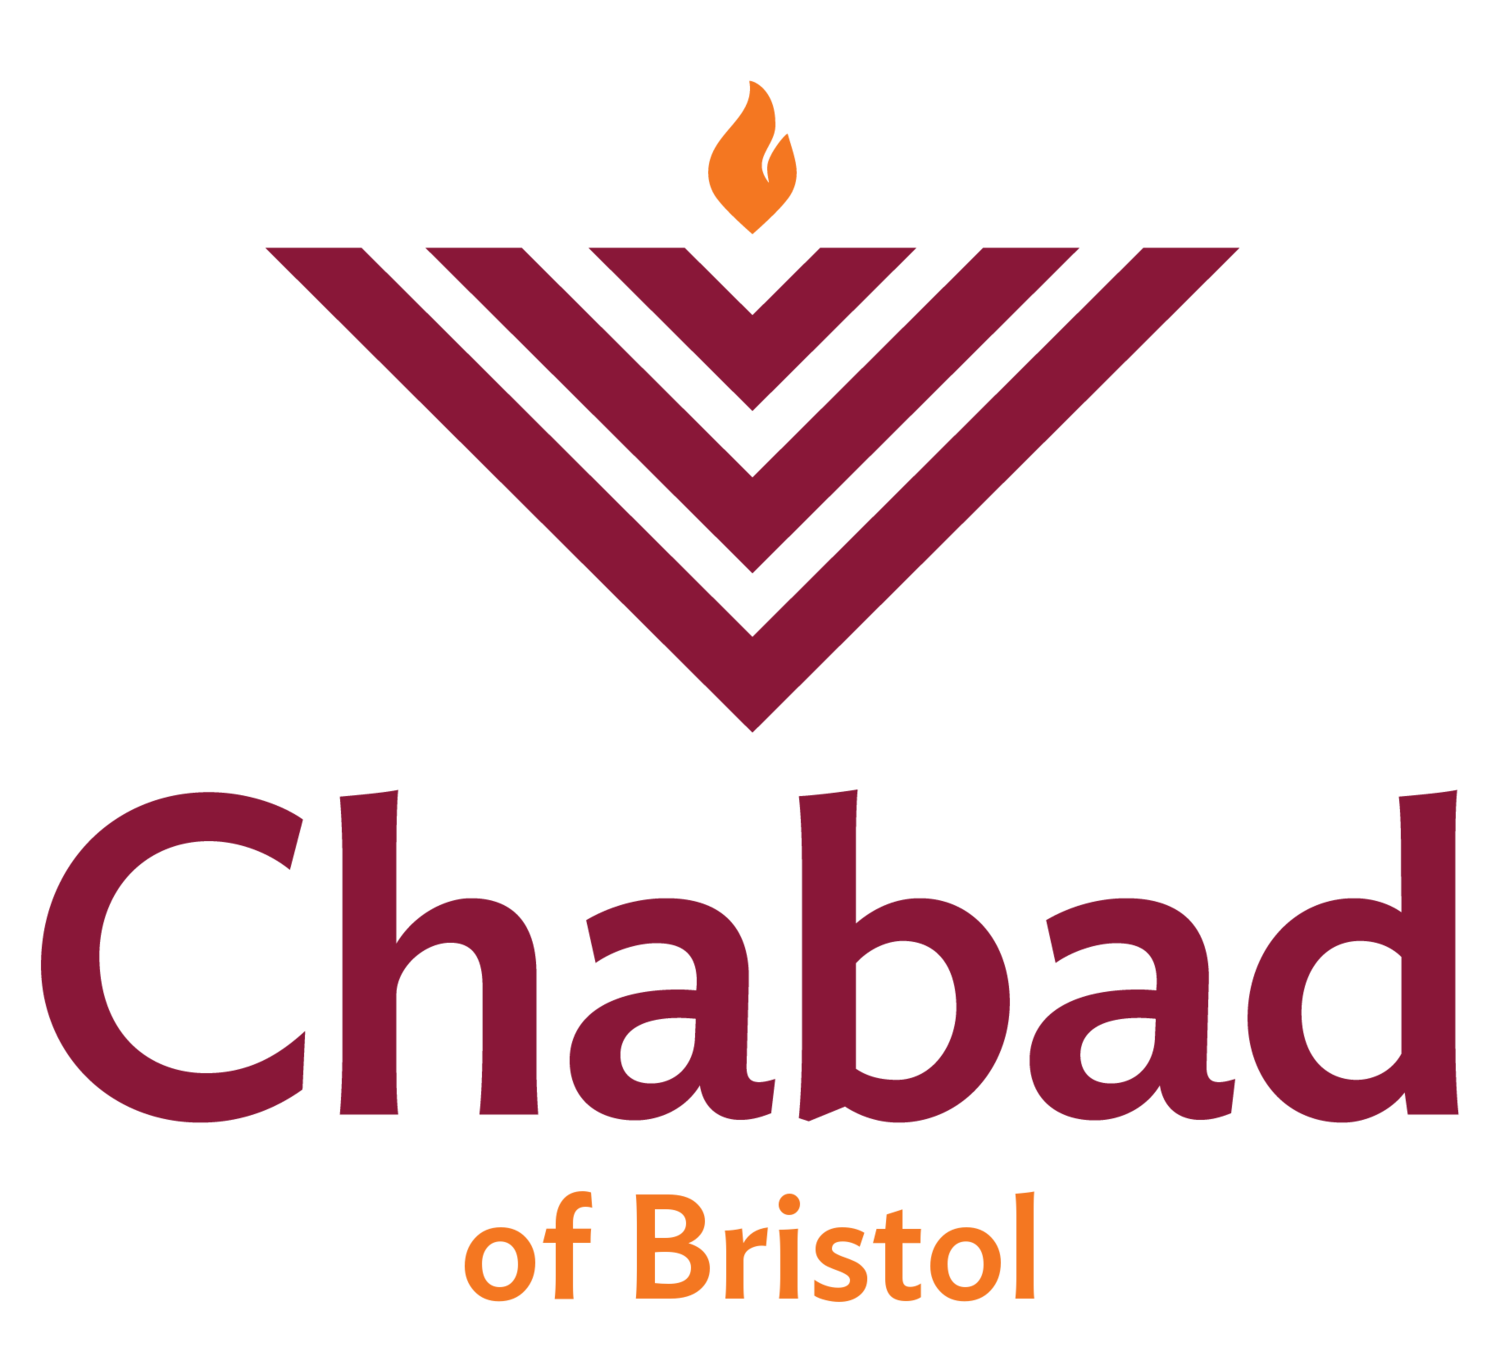 Chabad of Bristol logo